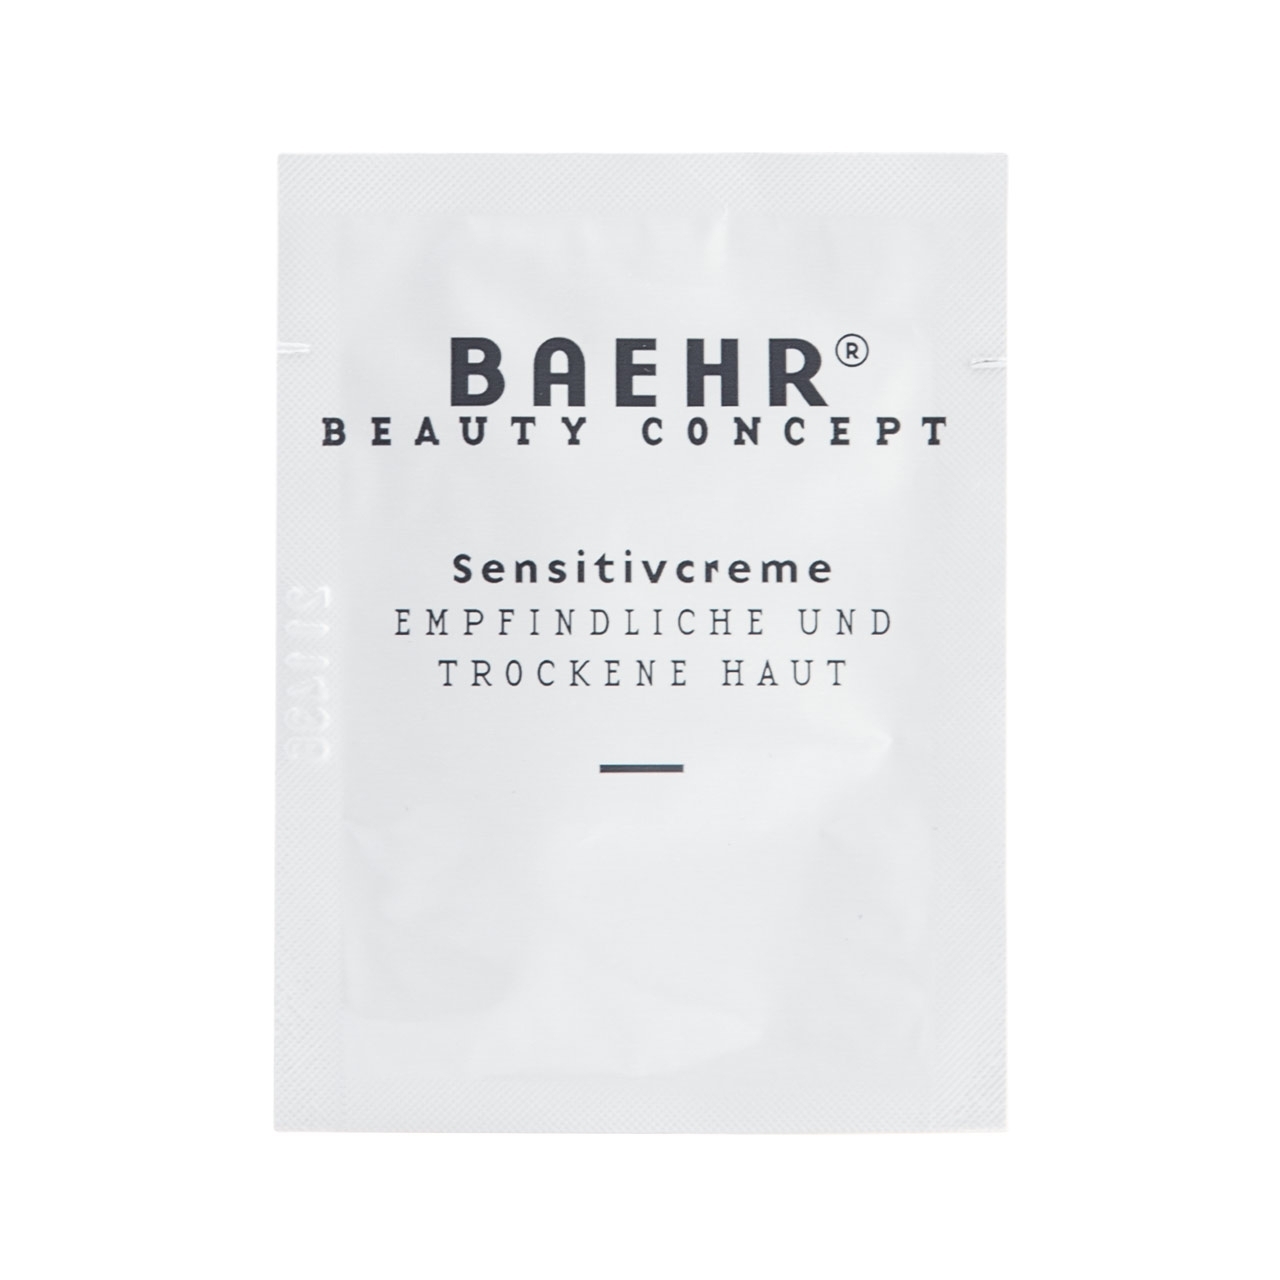 BAEHR BEAUTY CONCEPT - Sensitivcreme Probe, 1 Stk.